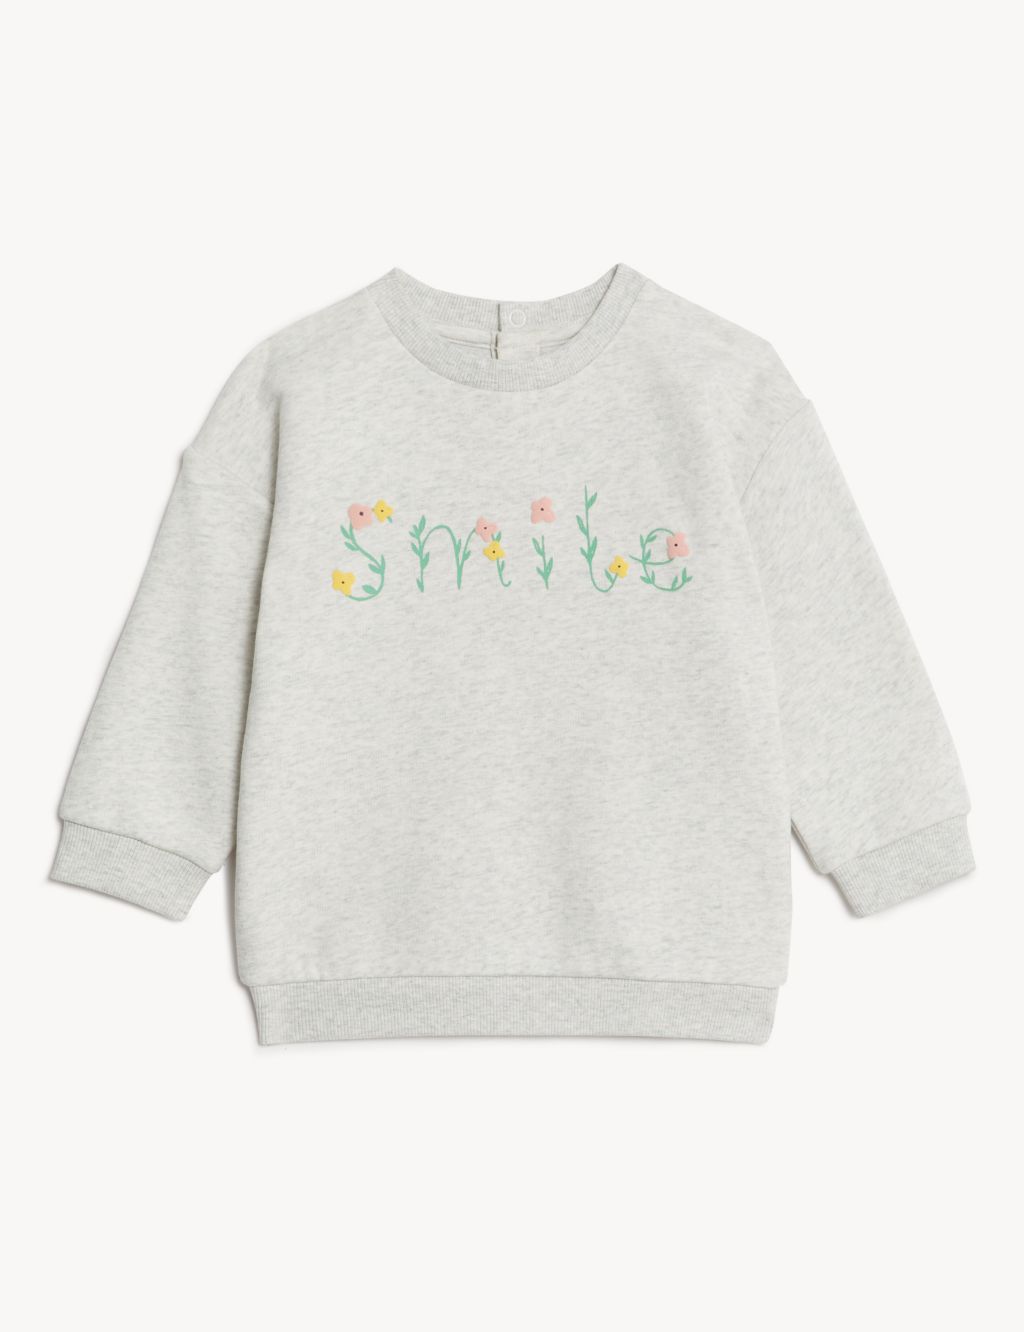 Cotton Rich Smile Slogan Sweater (0-3 Yrs) image 1